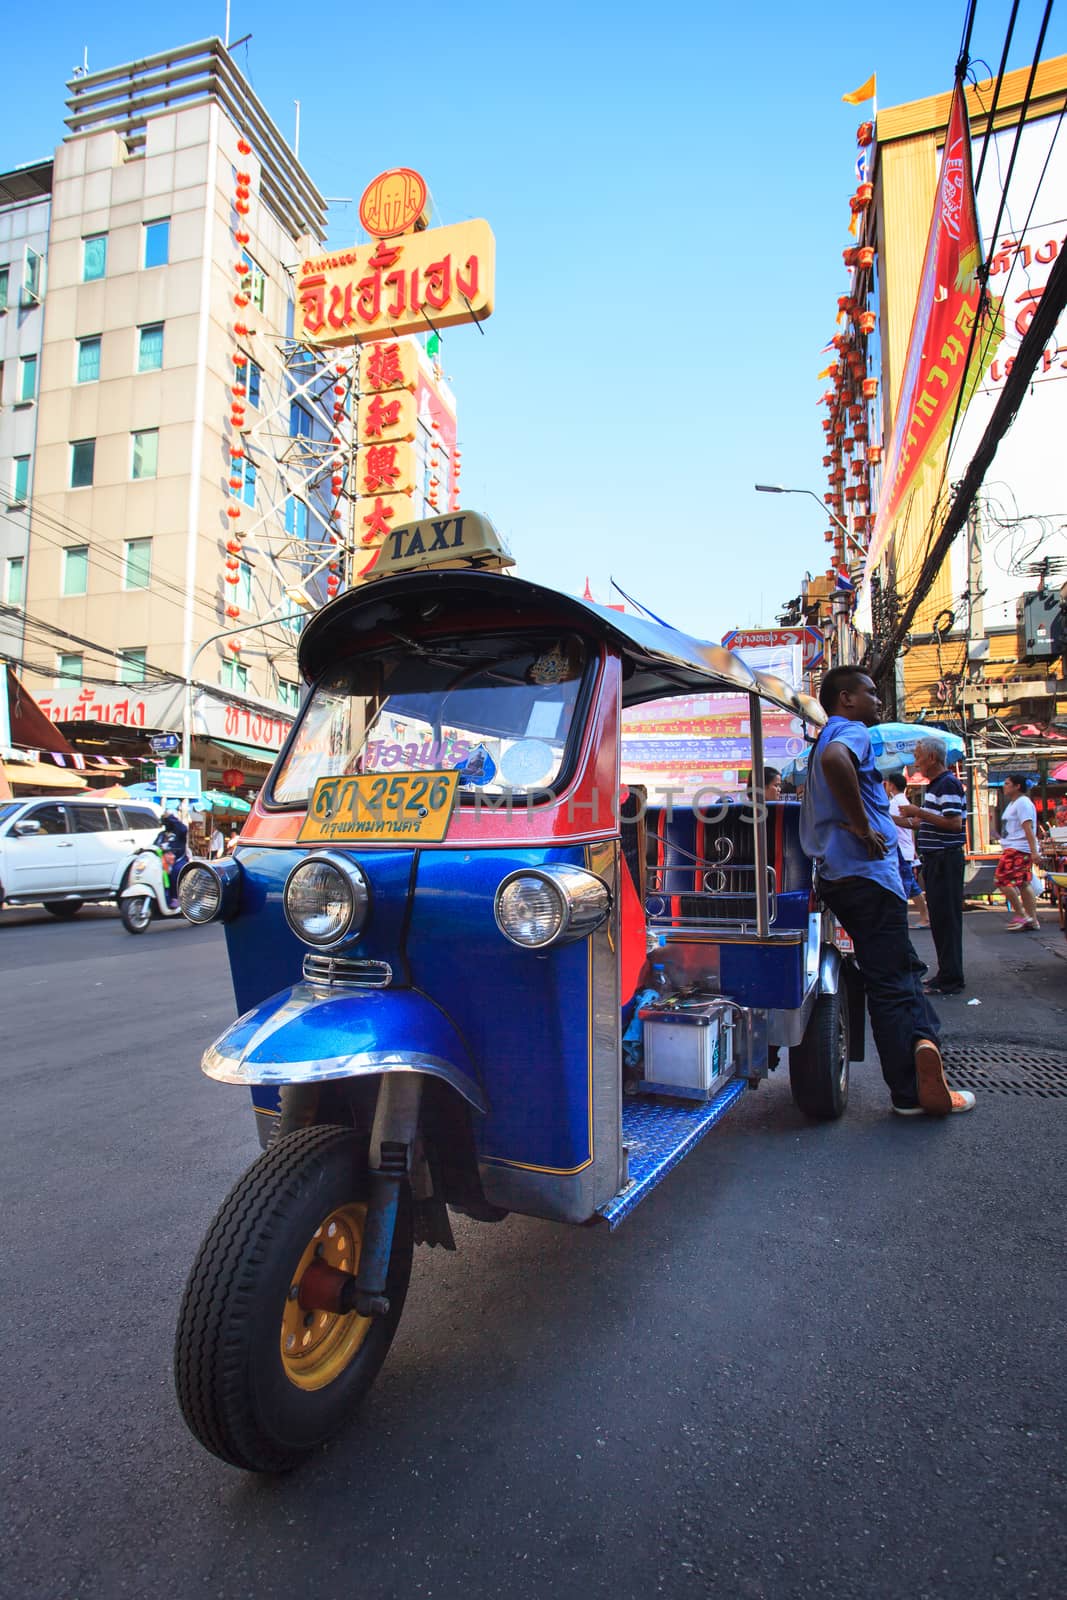 THAILAND,BANGKOK - FEB 24 :Tuk Tuk thailand vehicle symbol parking in Yaowarat Road,the main street in Chinatown, once of Bangkok landmark and important street for sale and buy gold in bangkok on february 24, 2015 in China town, Bangkok Thailand